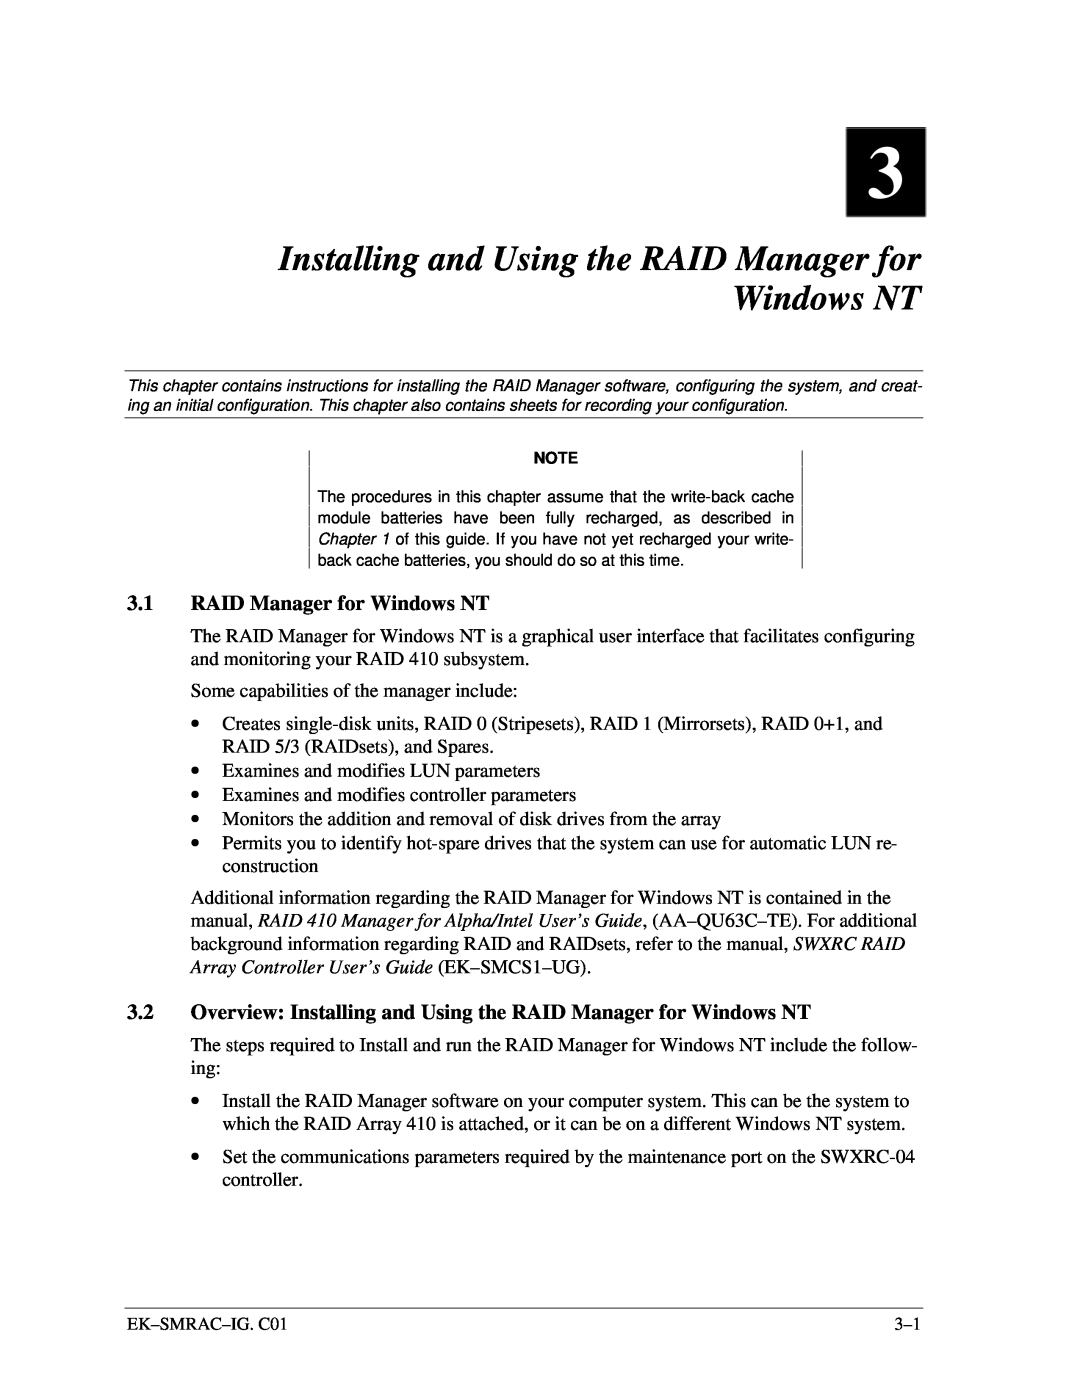 Intel 410 manual 3.1RAID Manager for Windows NT 